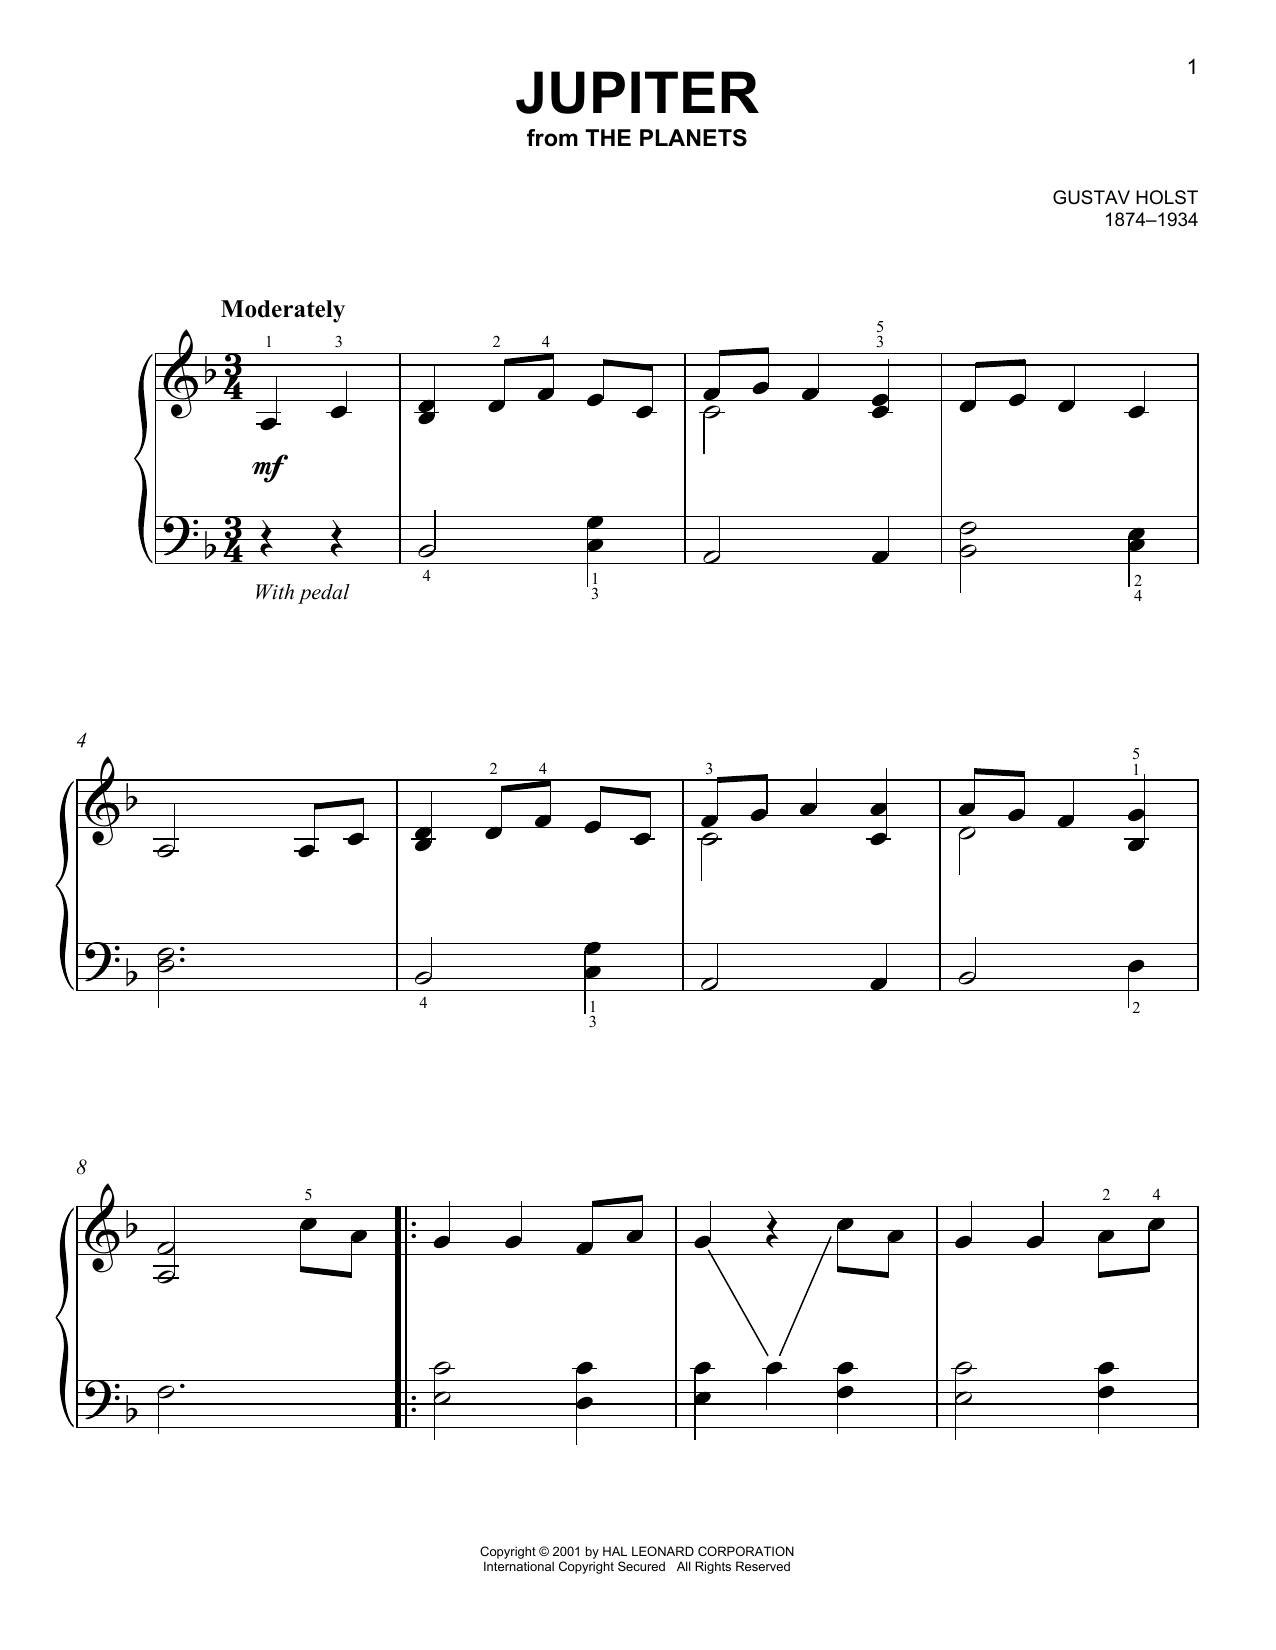 Gustav Holst Jupiter Sheet Music Notes & Chords for Piano - Download or Print PDF